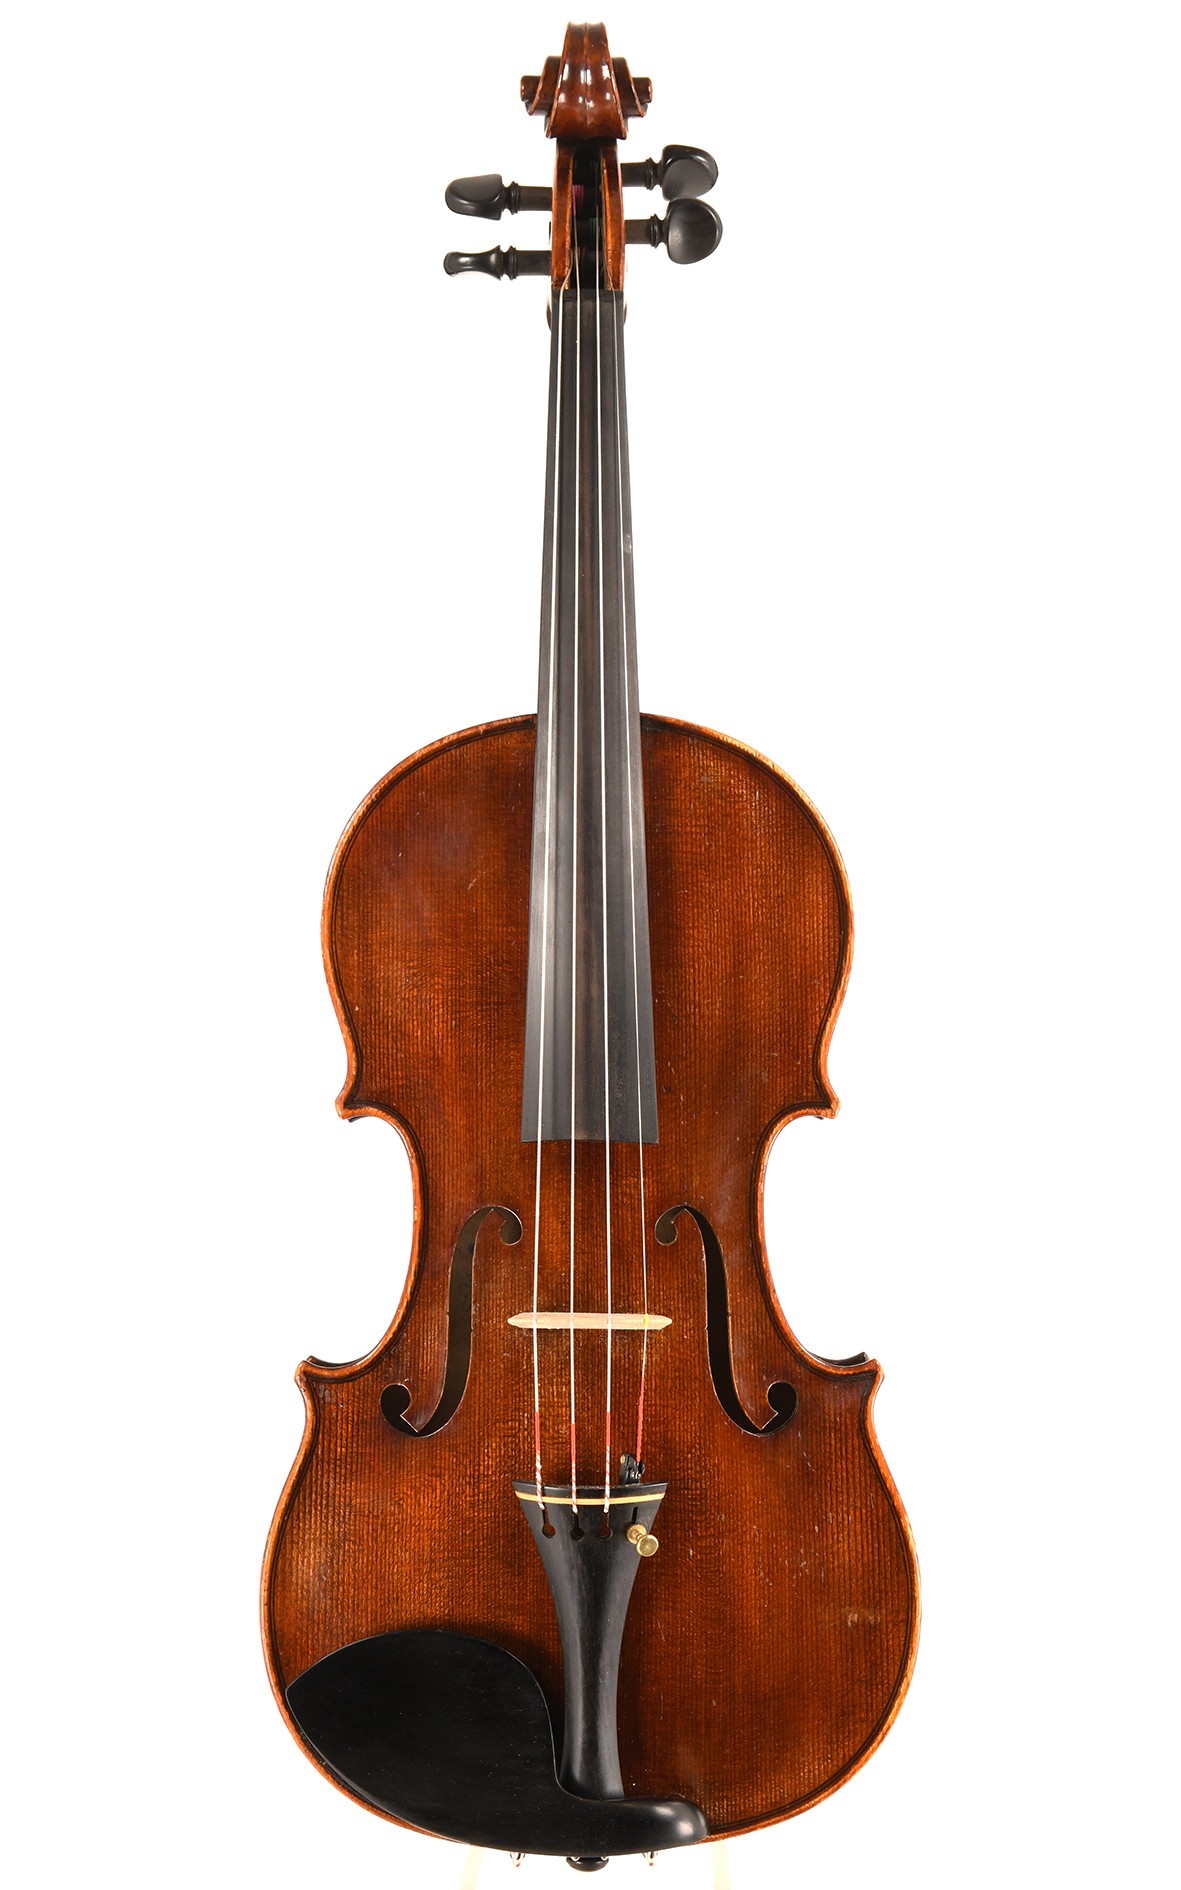 Josef Kasak, violon de maître allemand vers 1960 (Velbert)